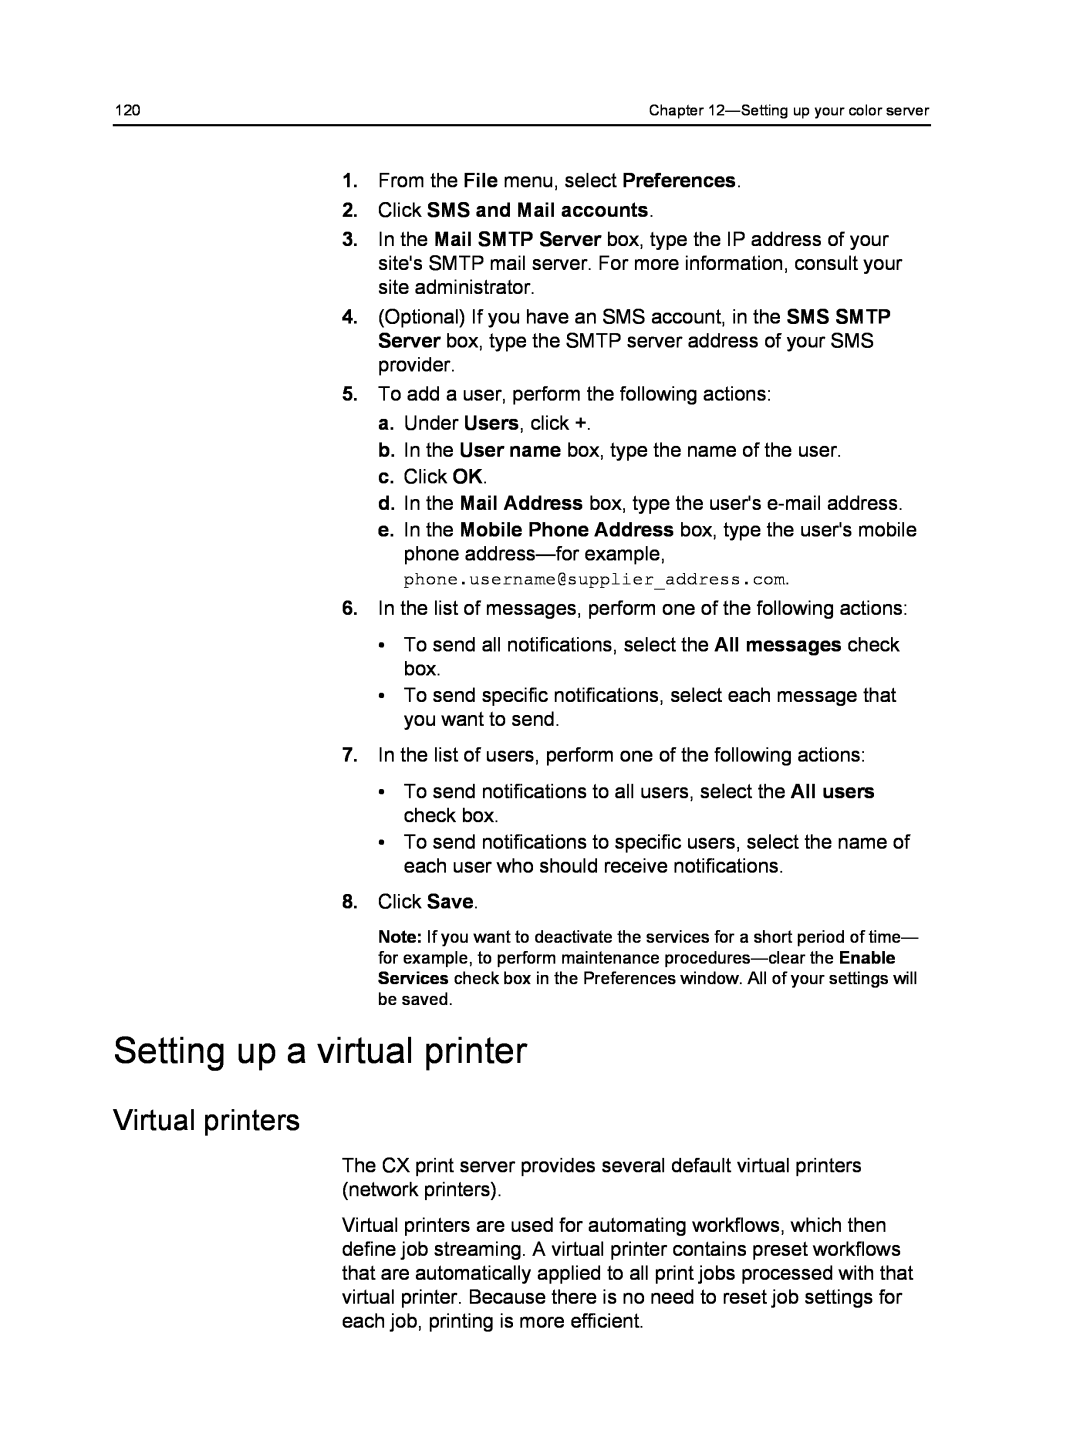 Xerox 560, 550 manual Setting up a virtual printer, Virtual printers, Click SMS and Mail accounts 